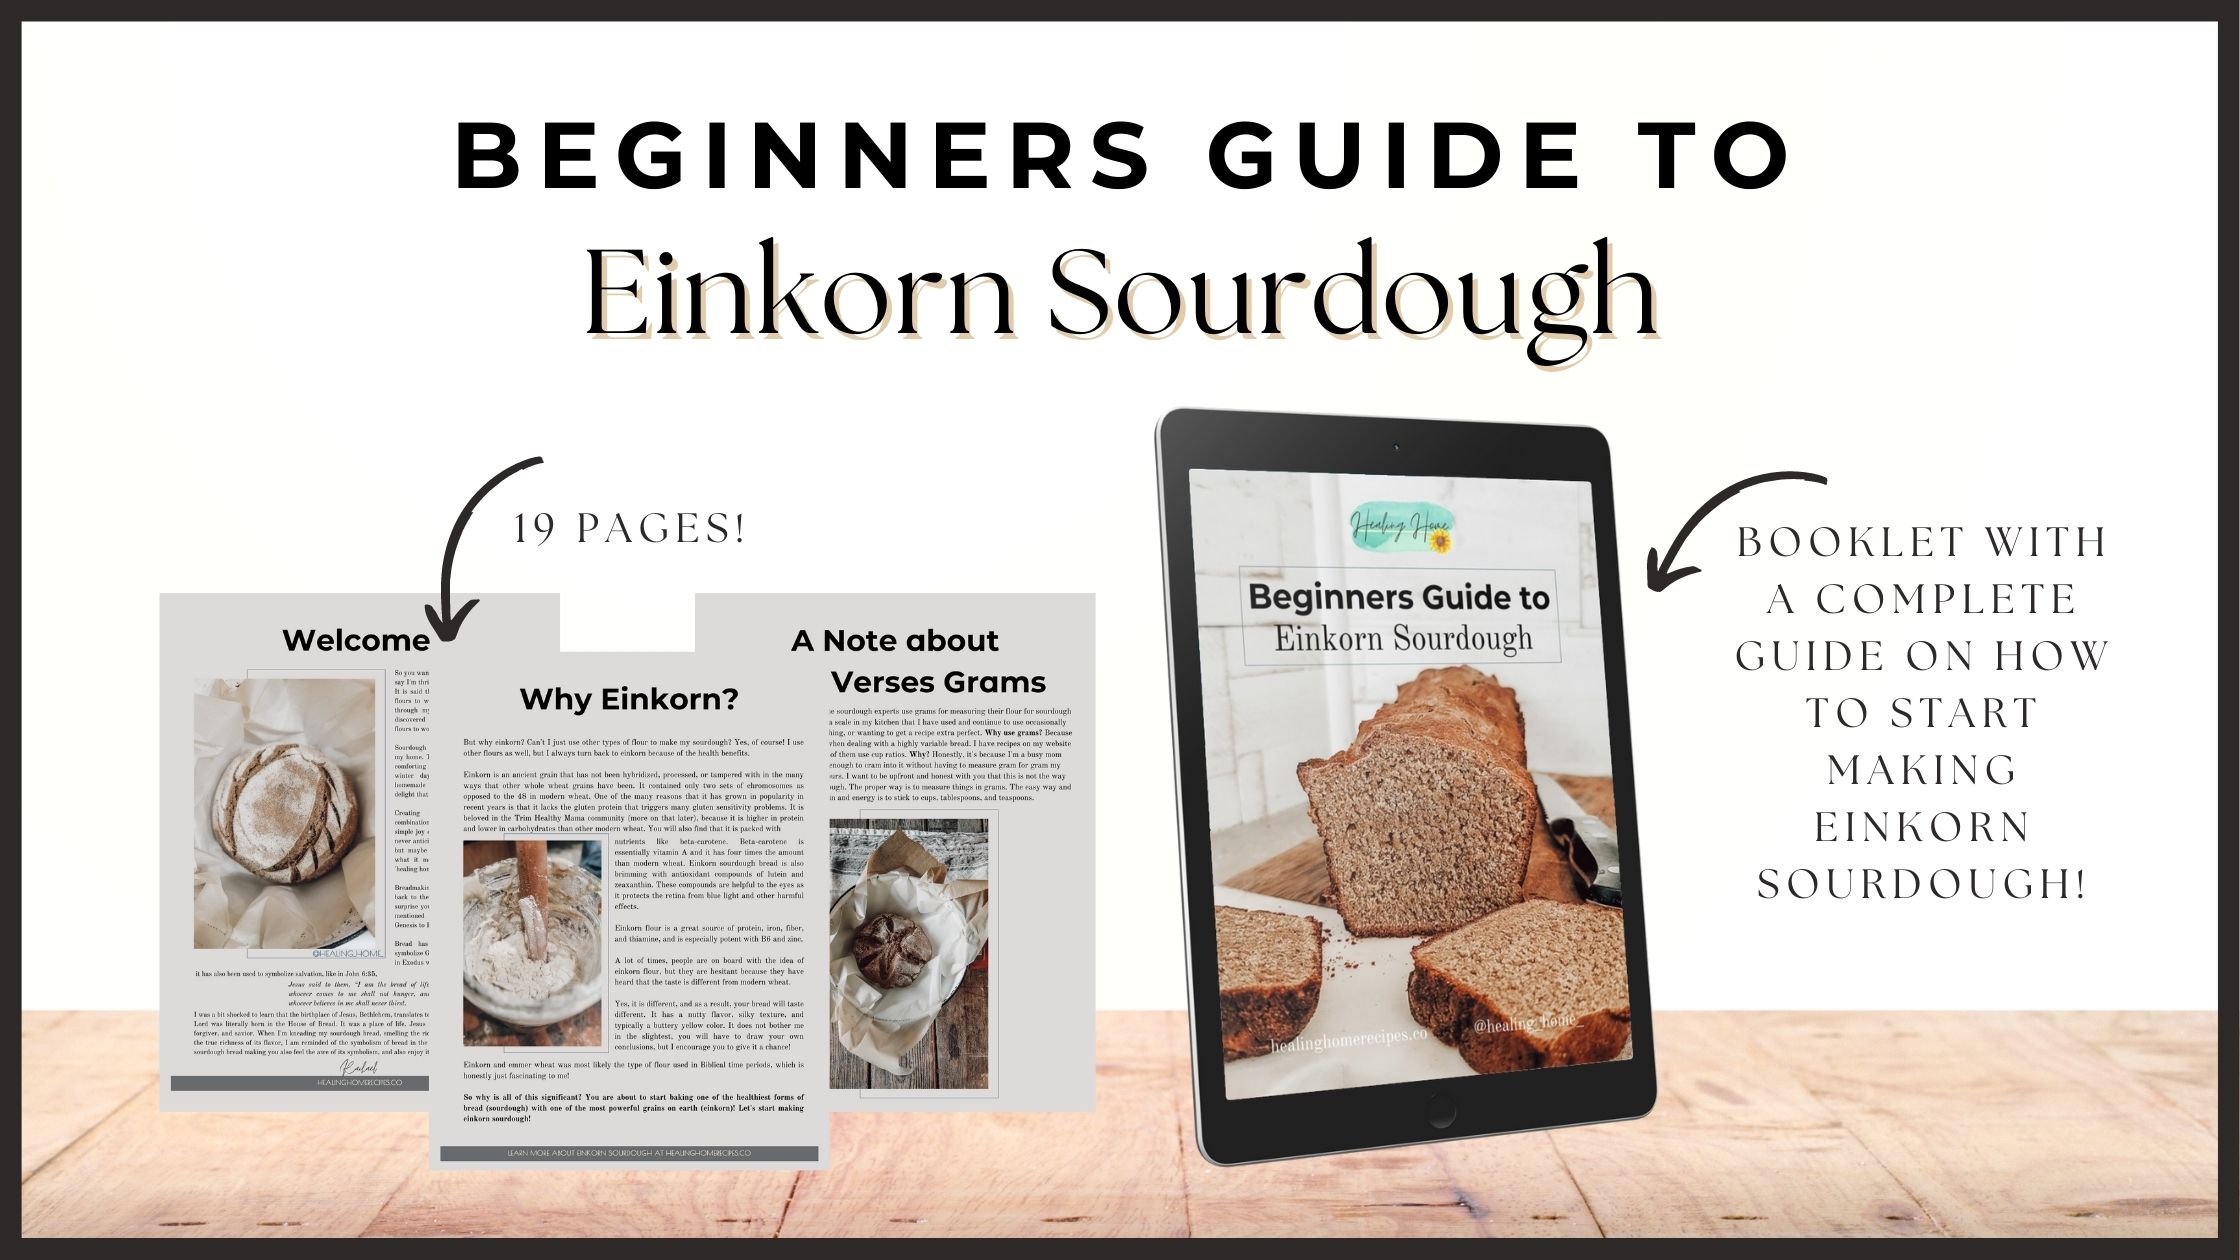 Beginners guide to einkorn sourdough